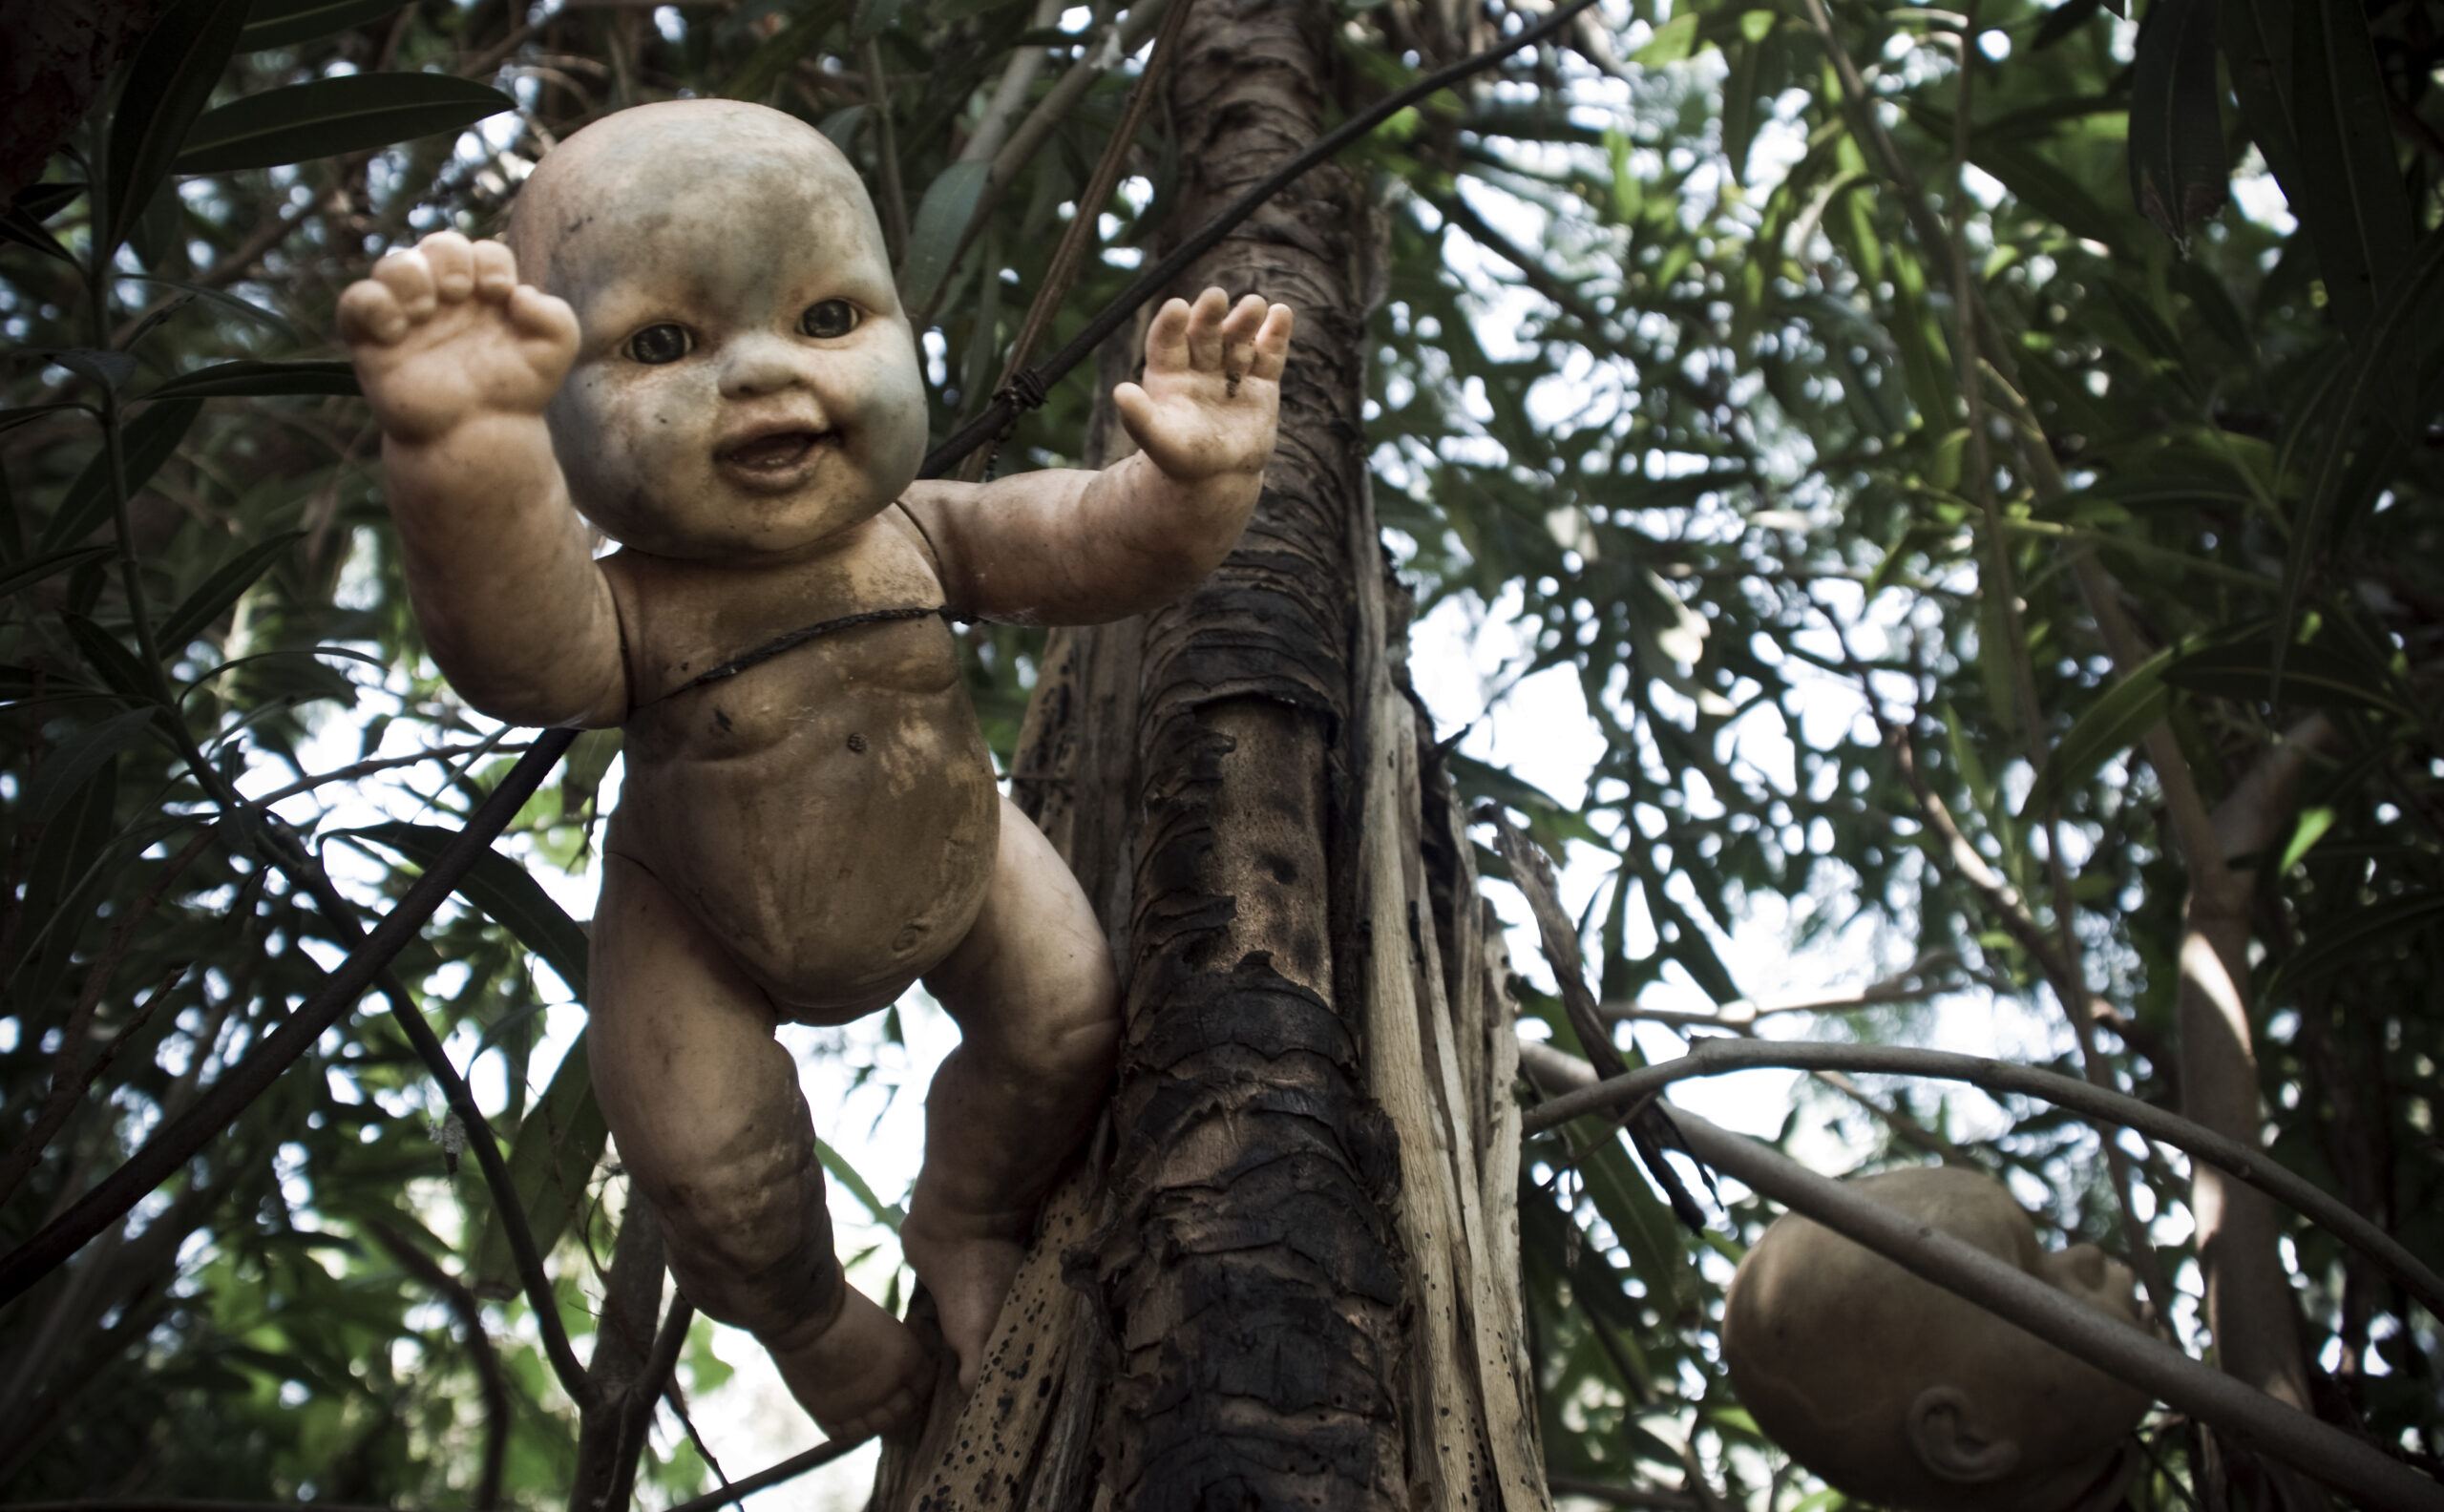 Insel der Puppen – Isla de las muñecas: Gruselige Puppeninsel in Mexiko